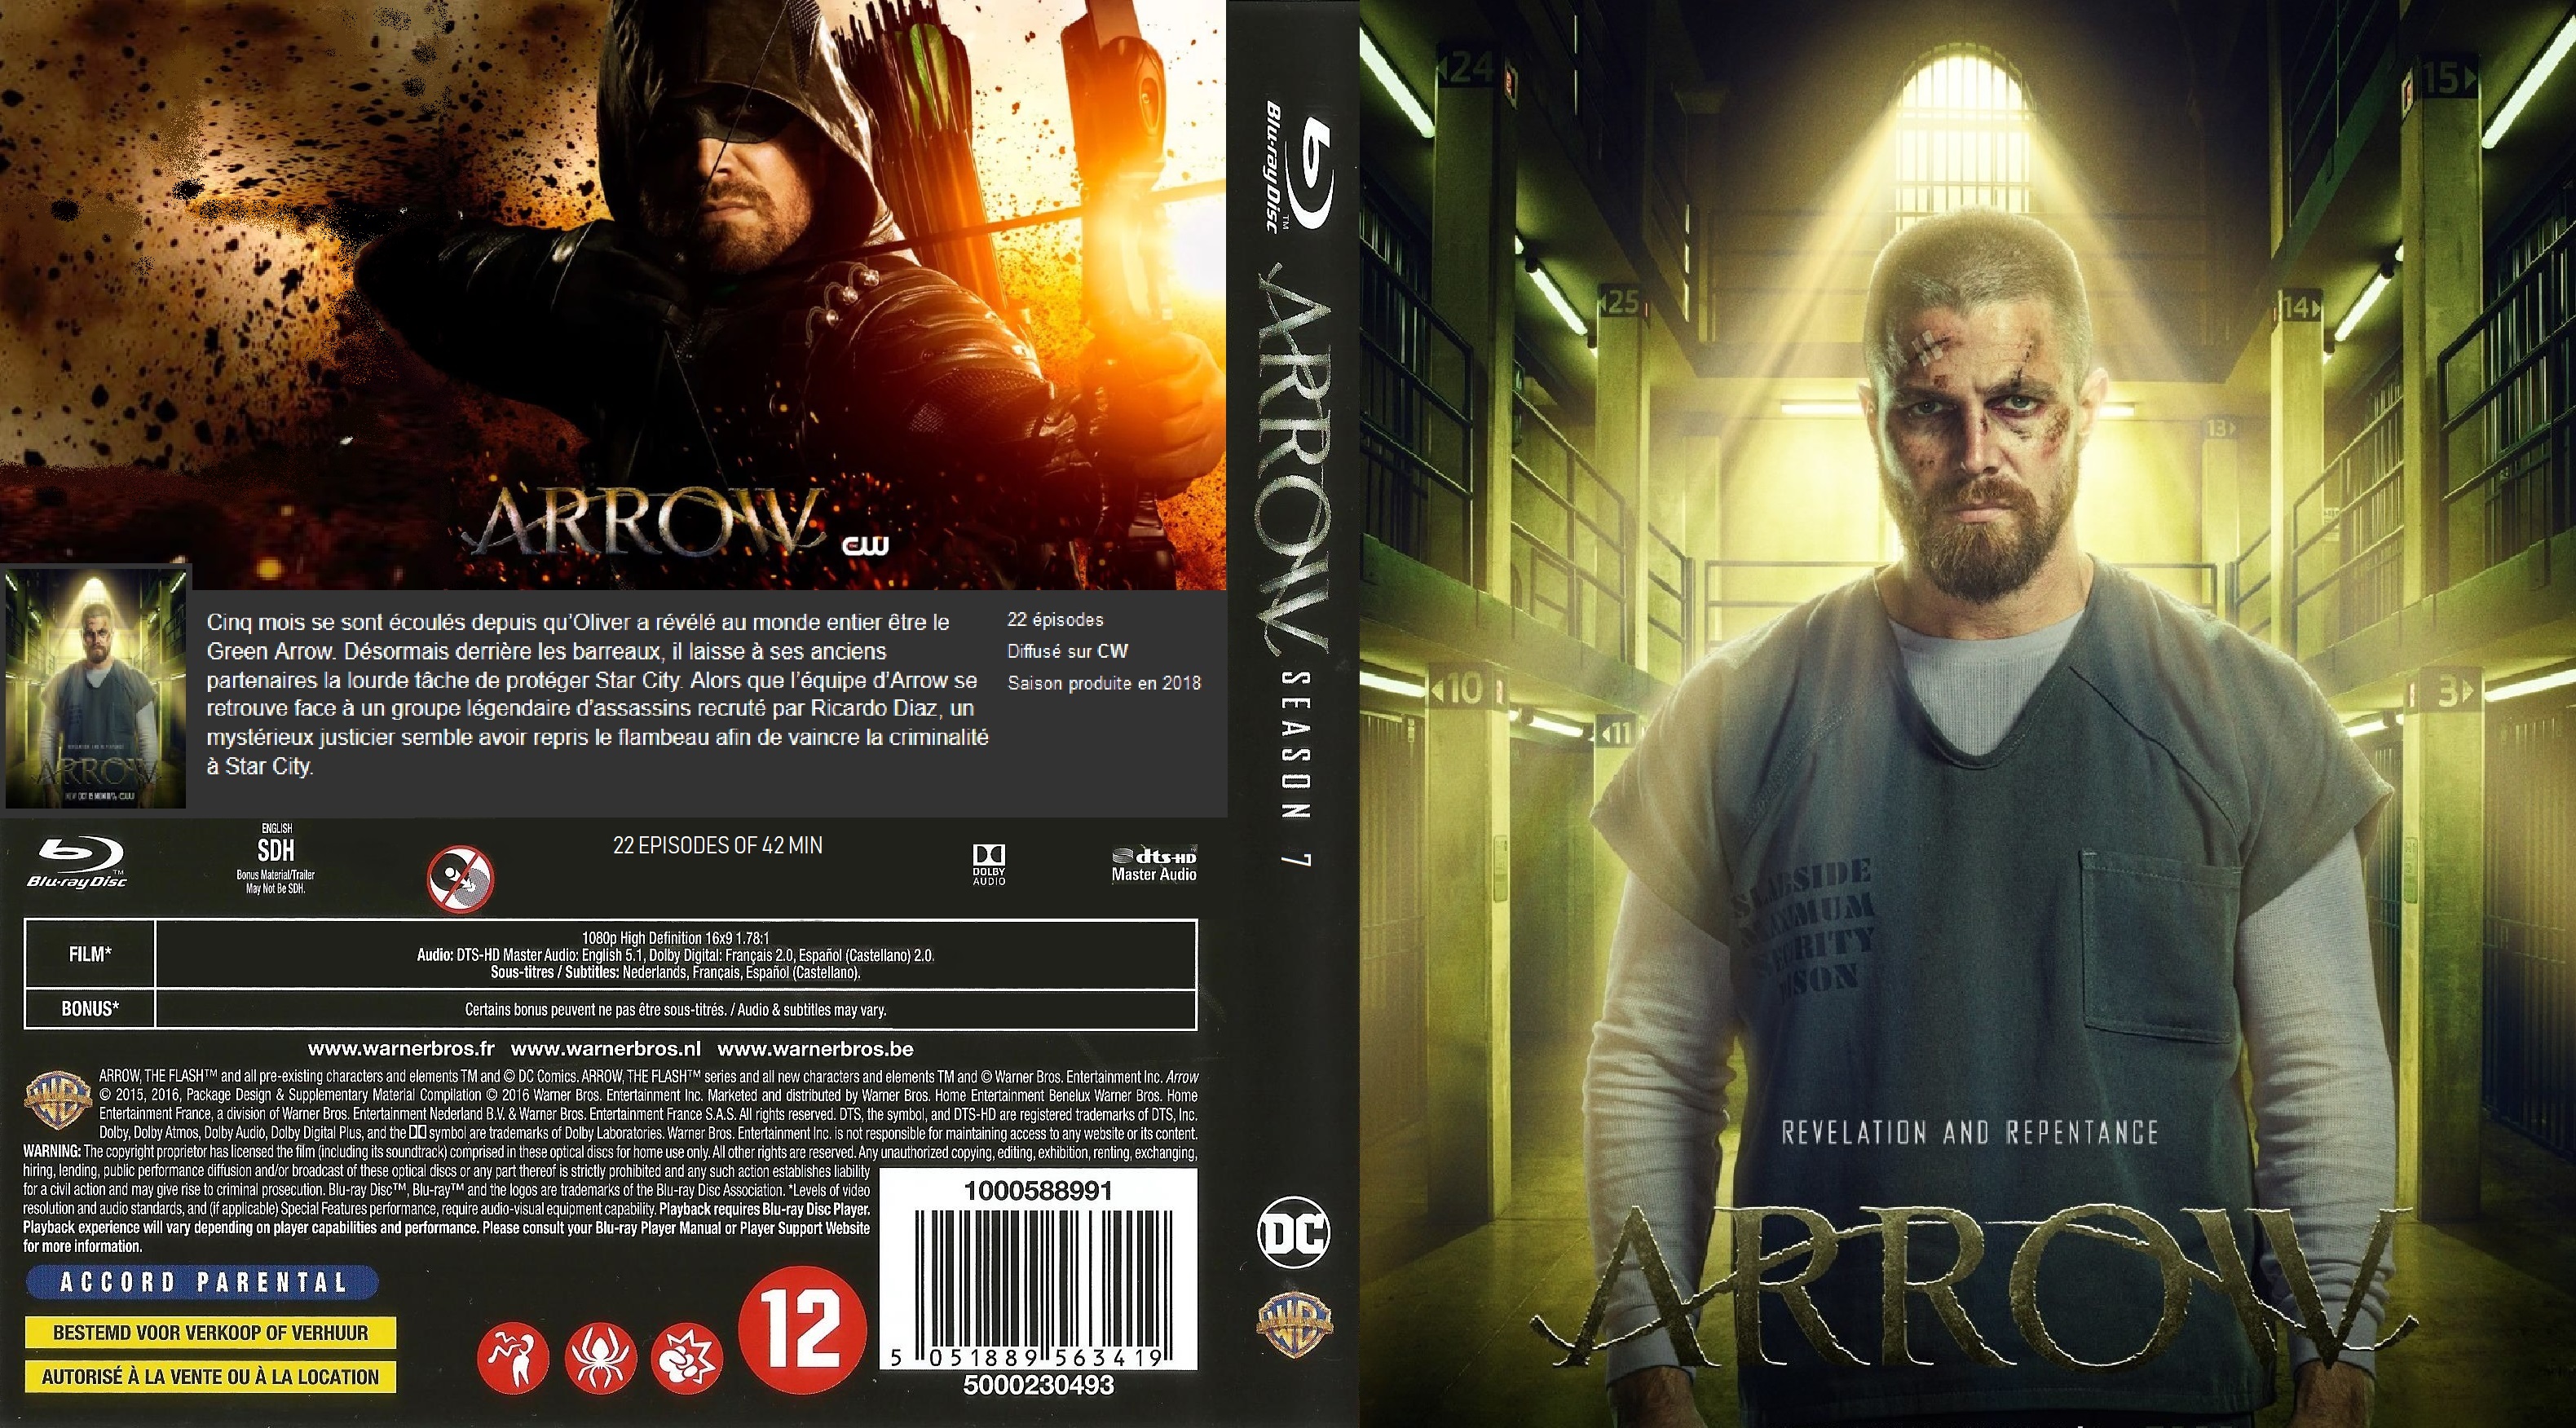 Jaquette DVD Arrow saison 7 custom (BLU-RAY)